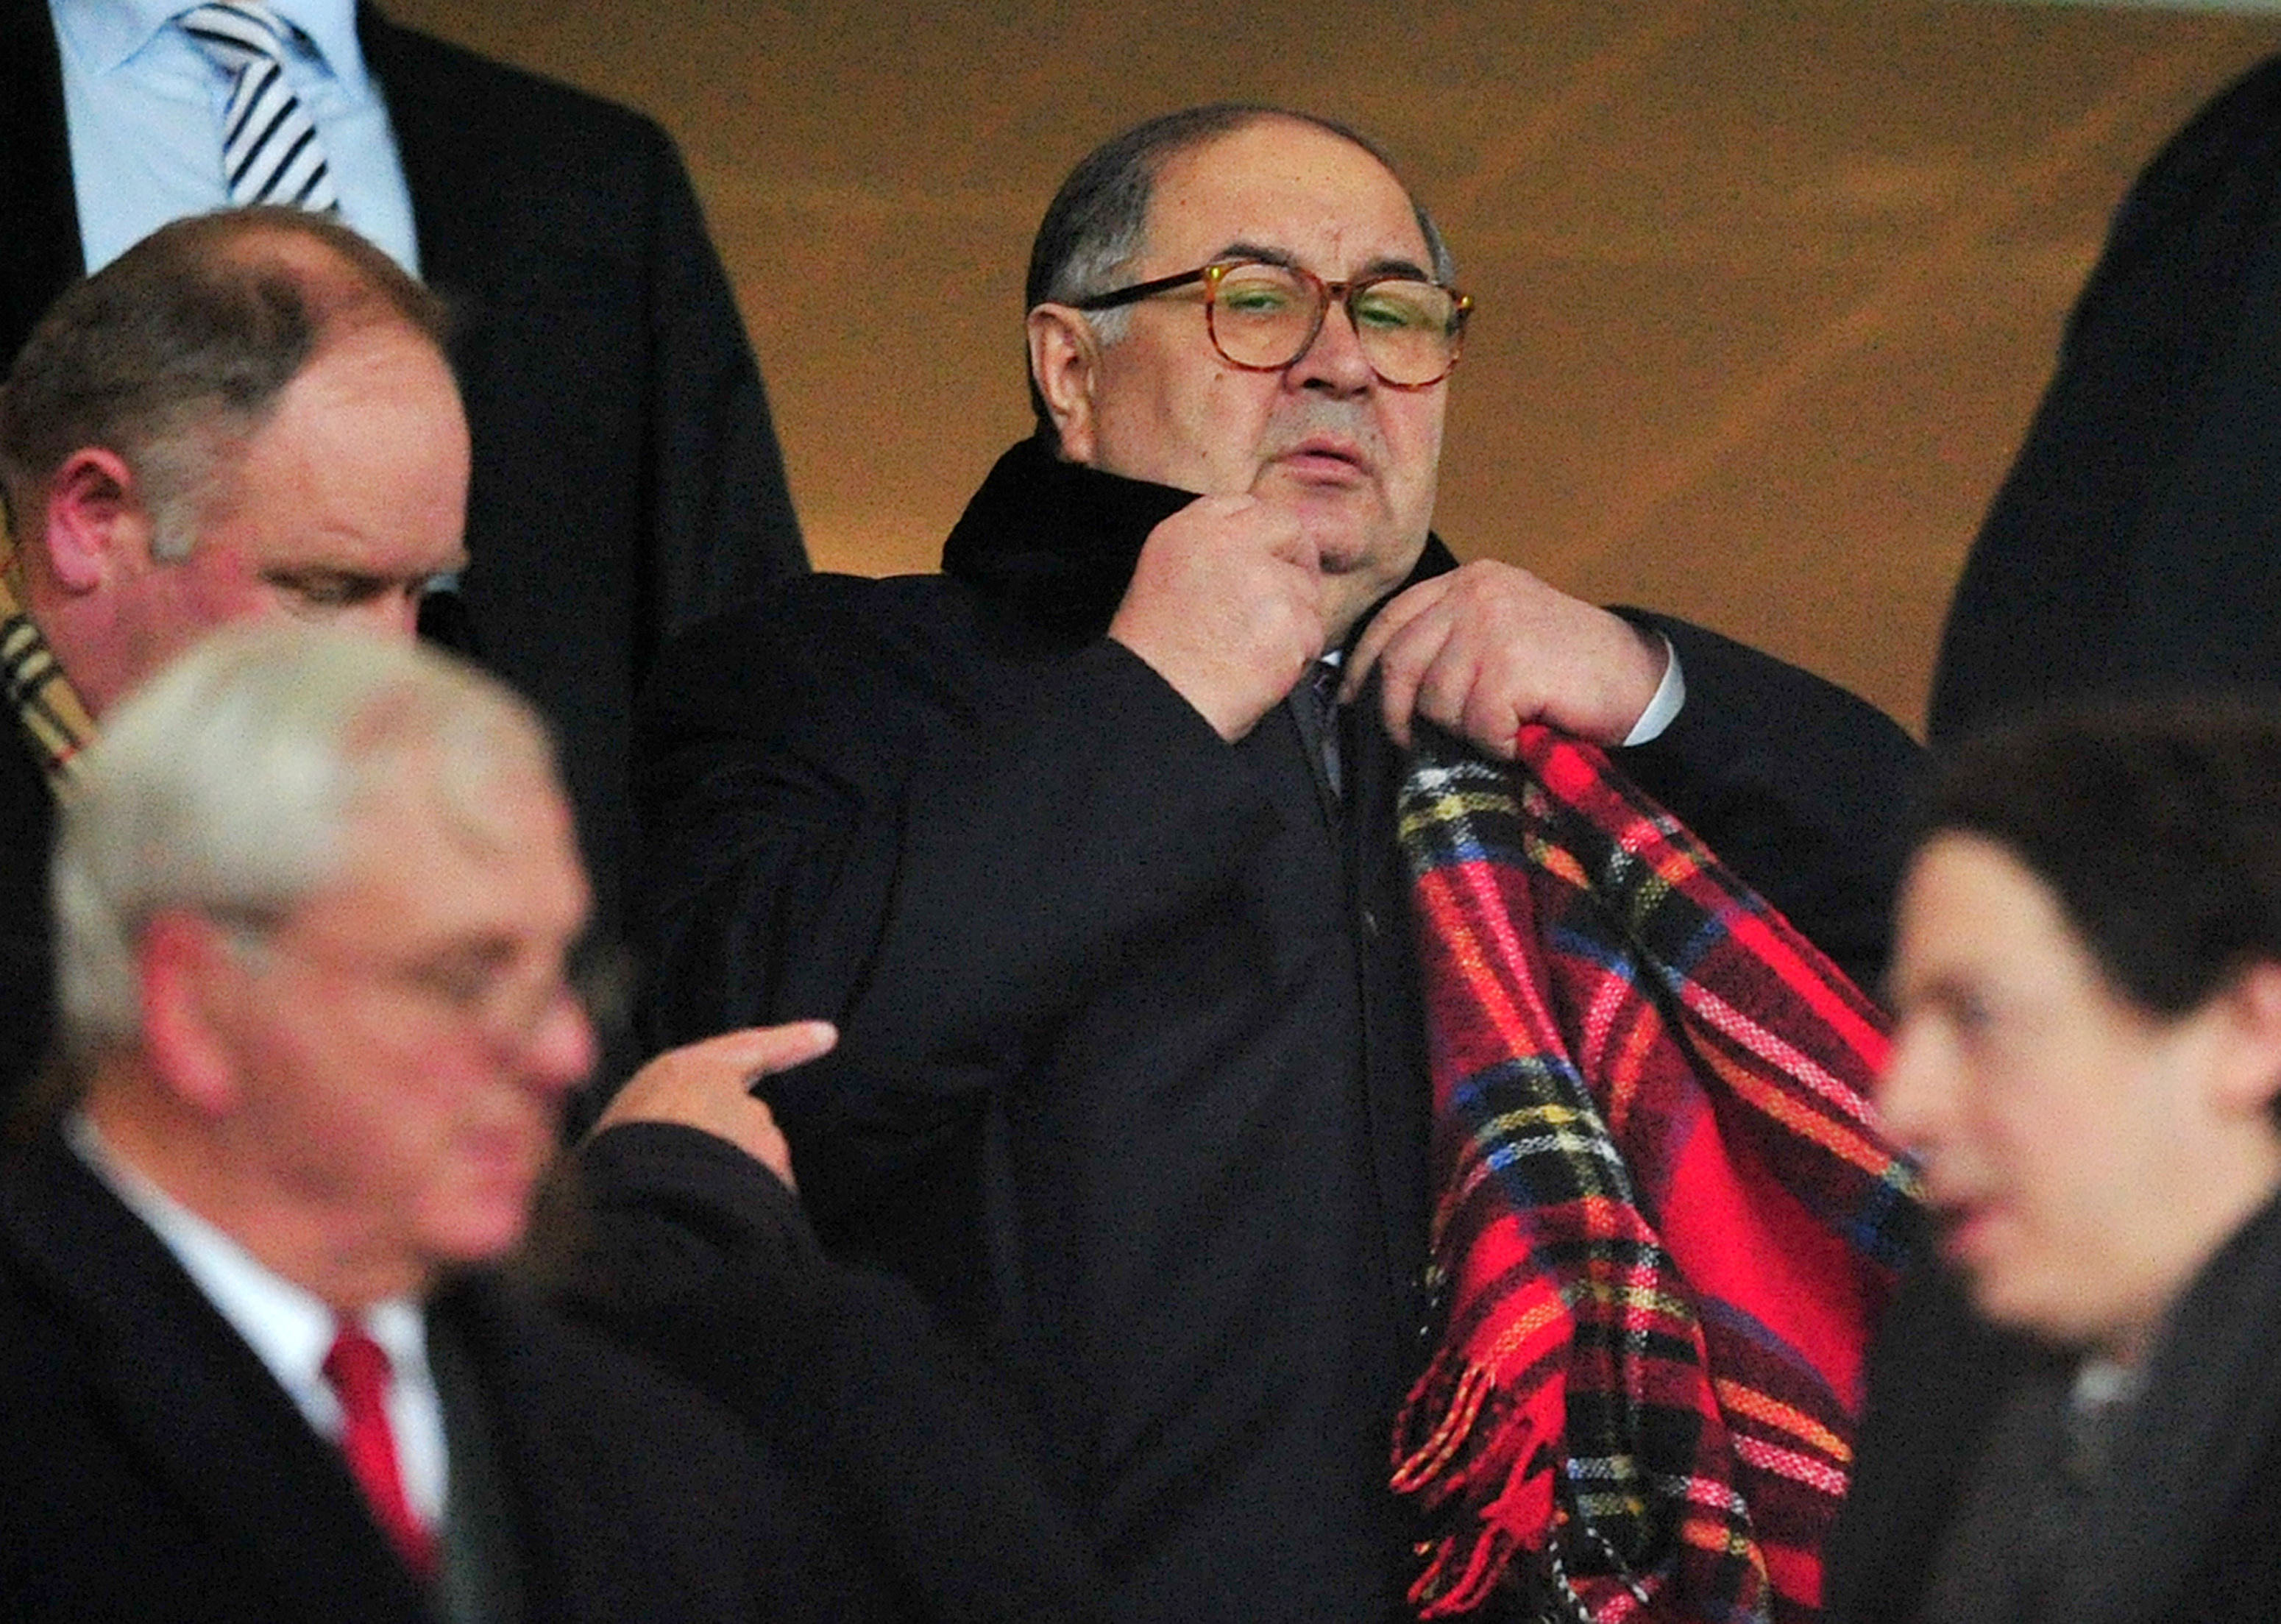 Usmanov earlier held shares at Arsenal. (Photo credit should read GLYN KIRK/AFP/Getty Images)